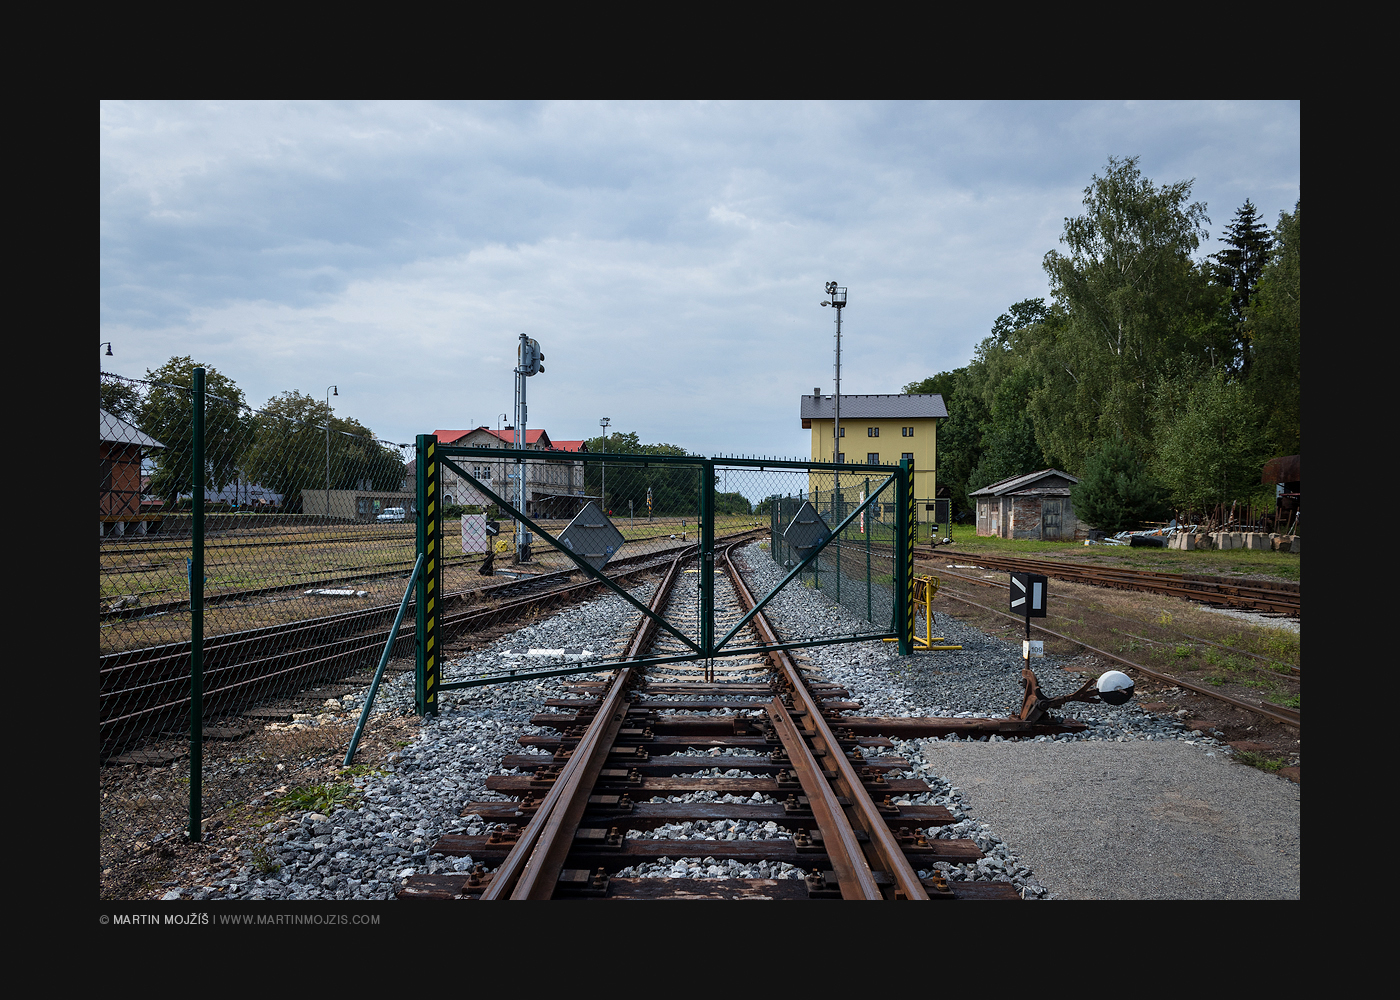 Railway museum gate. Railway muzeum in Luzna near Rakovnik.